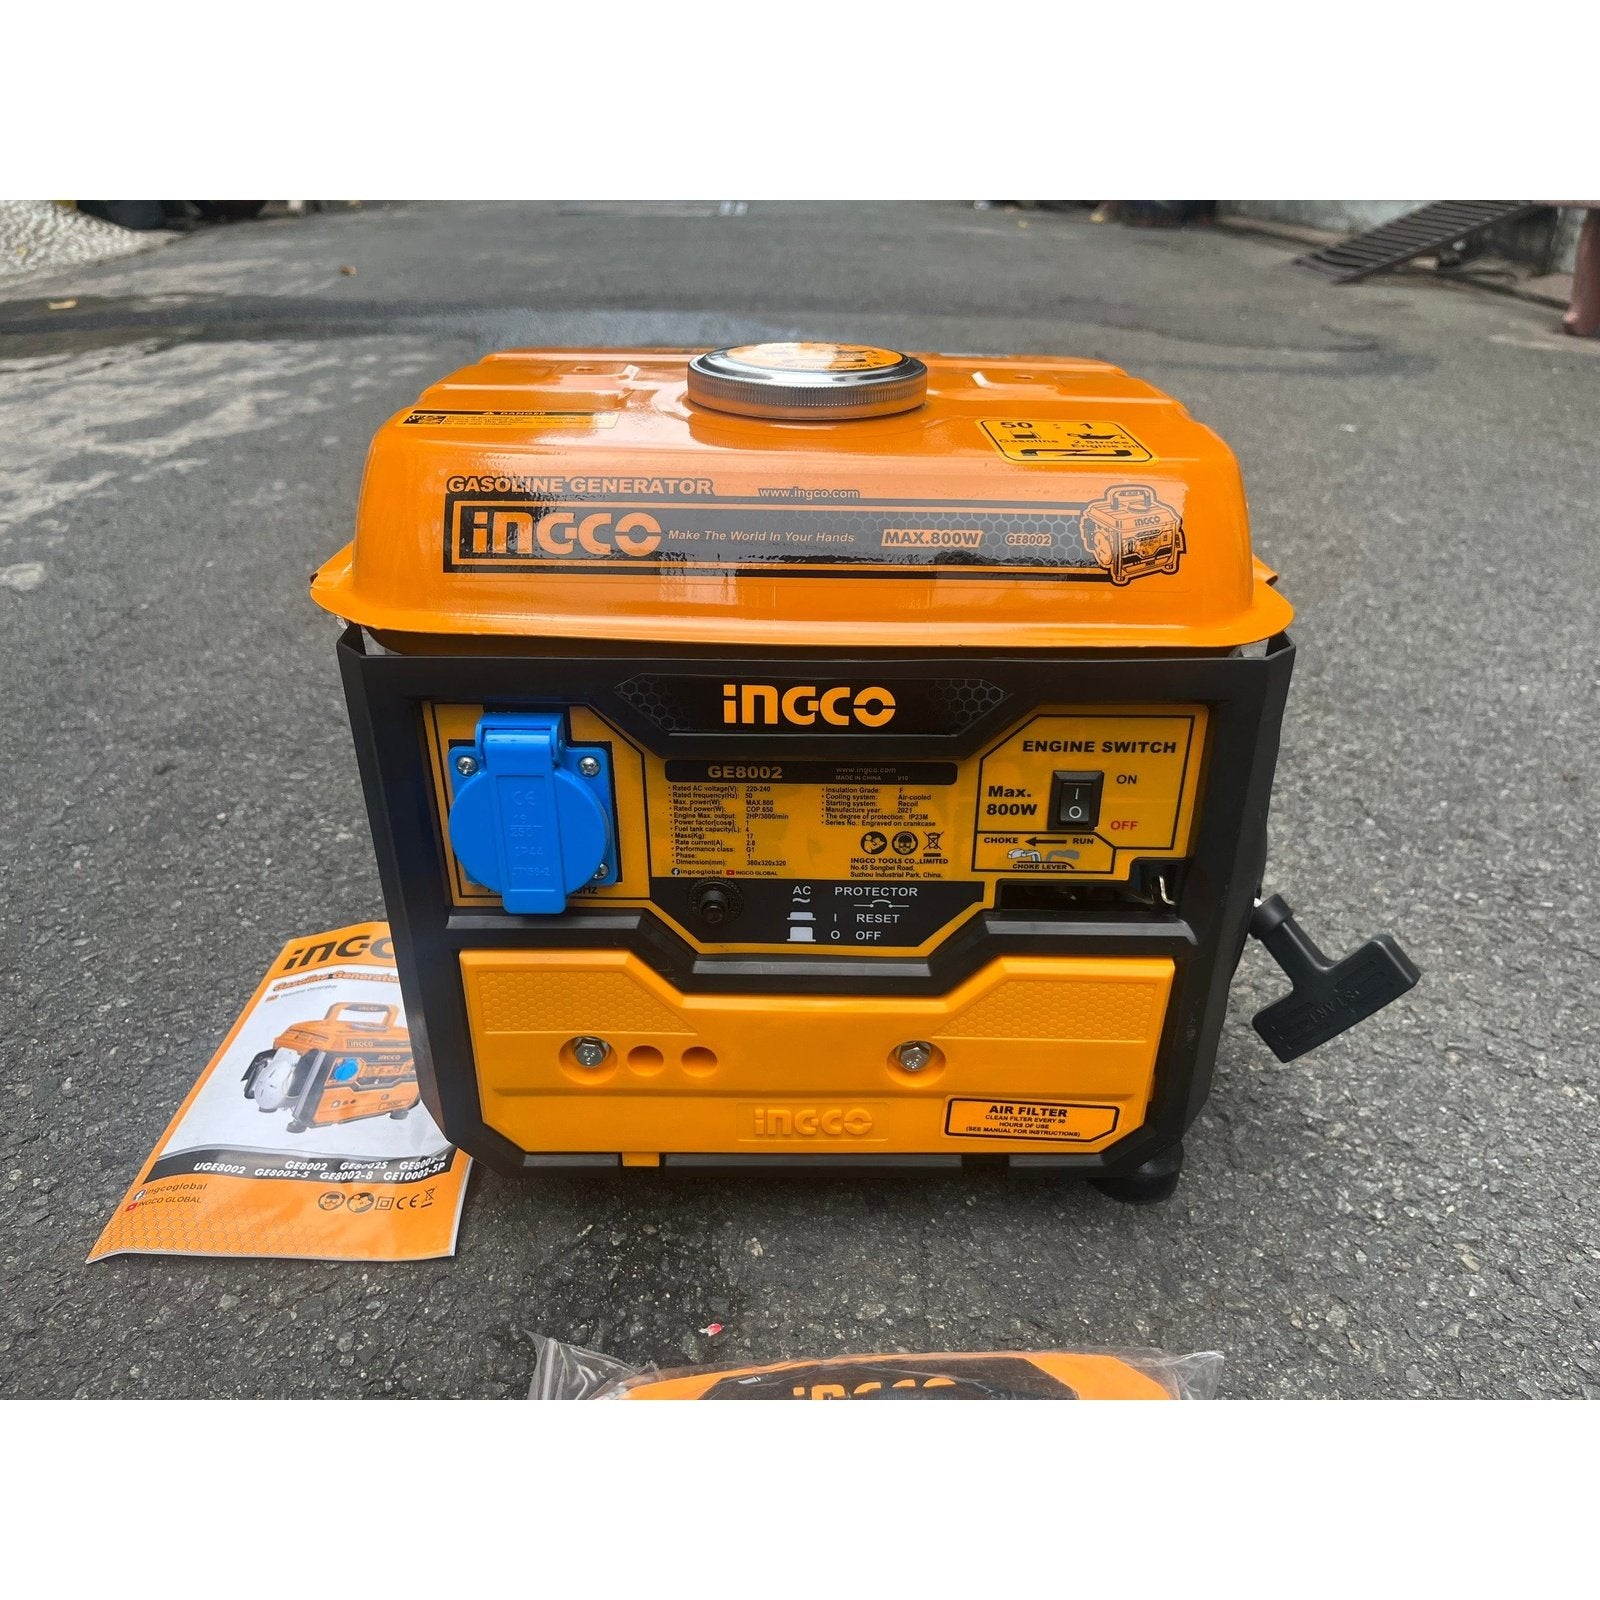 Ingco 800W Gasoline Generator - GE8002 | Supply Master | Accra, Ghana Generator Buy Tools hardware Building materials